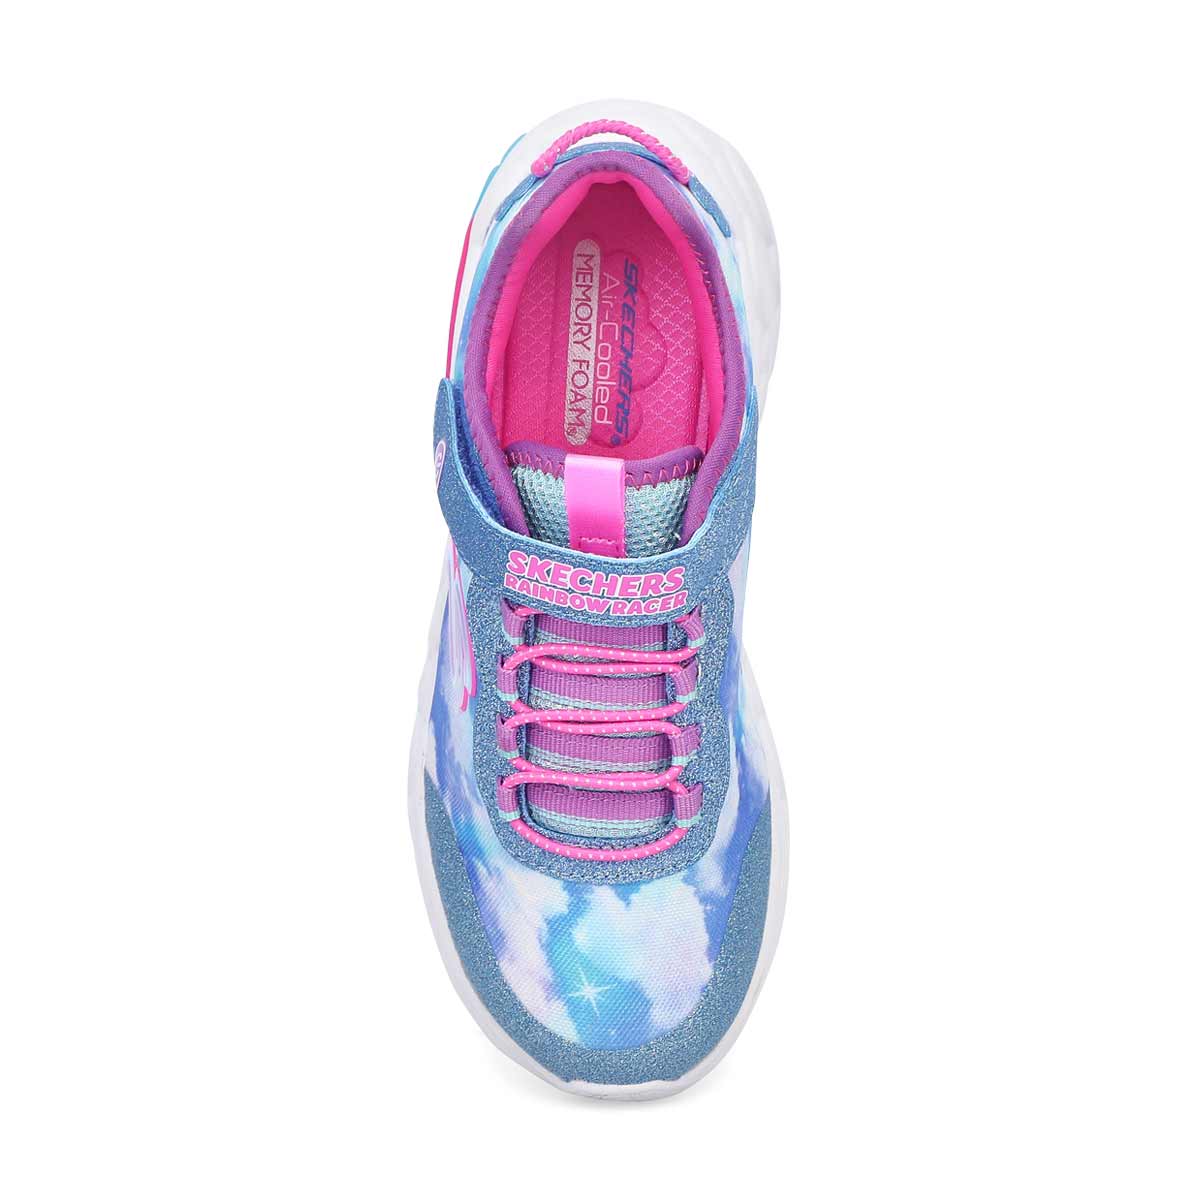 Girls' Rainbow Racer Light Up Sneaker - Blue